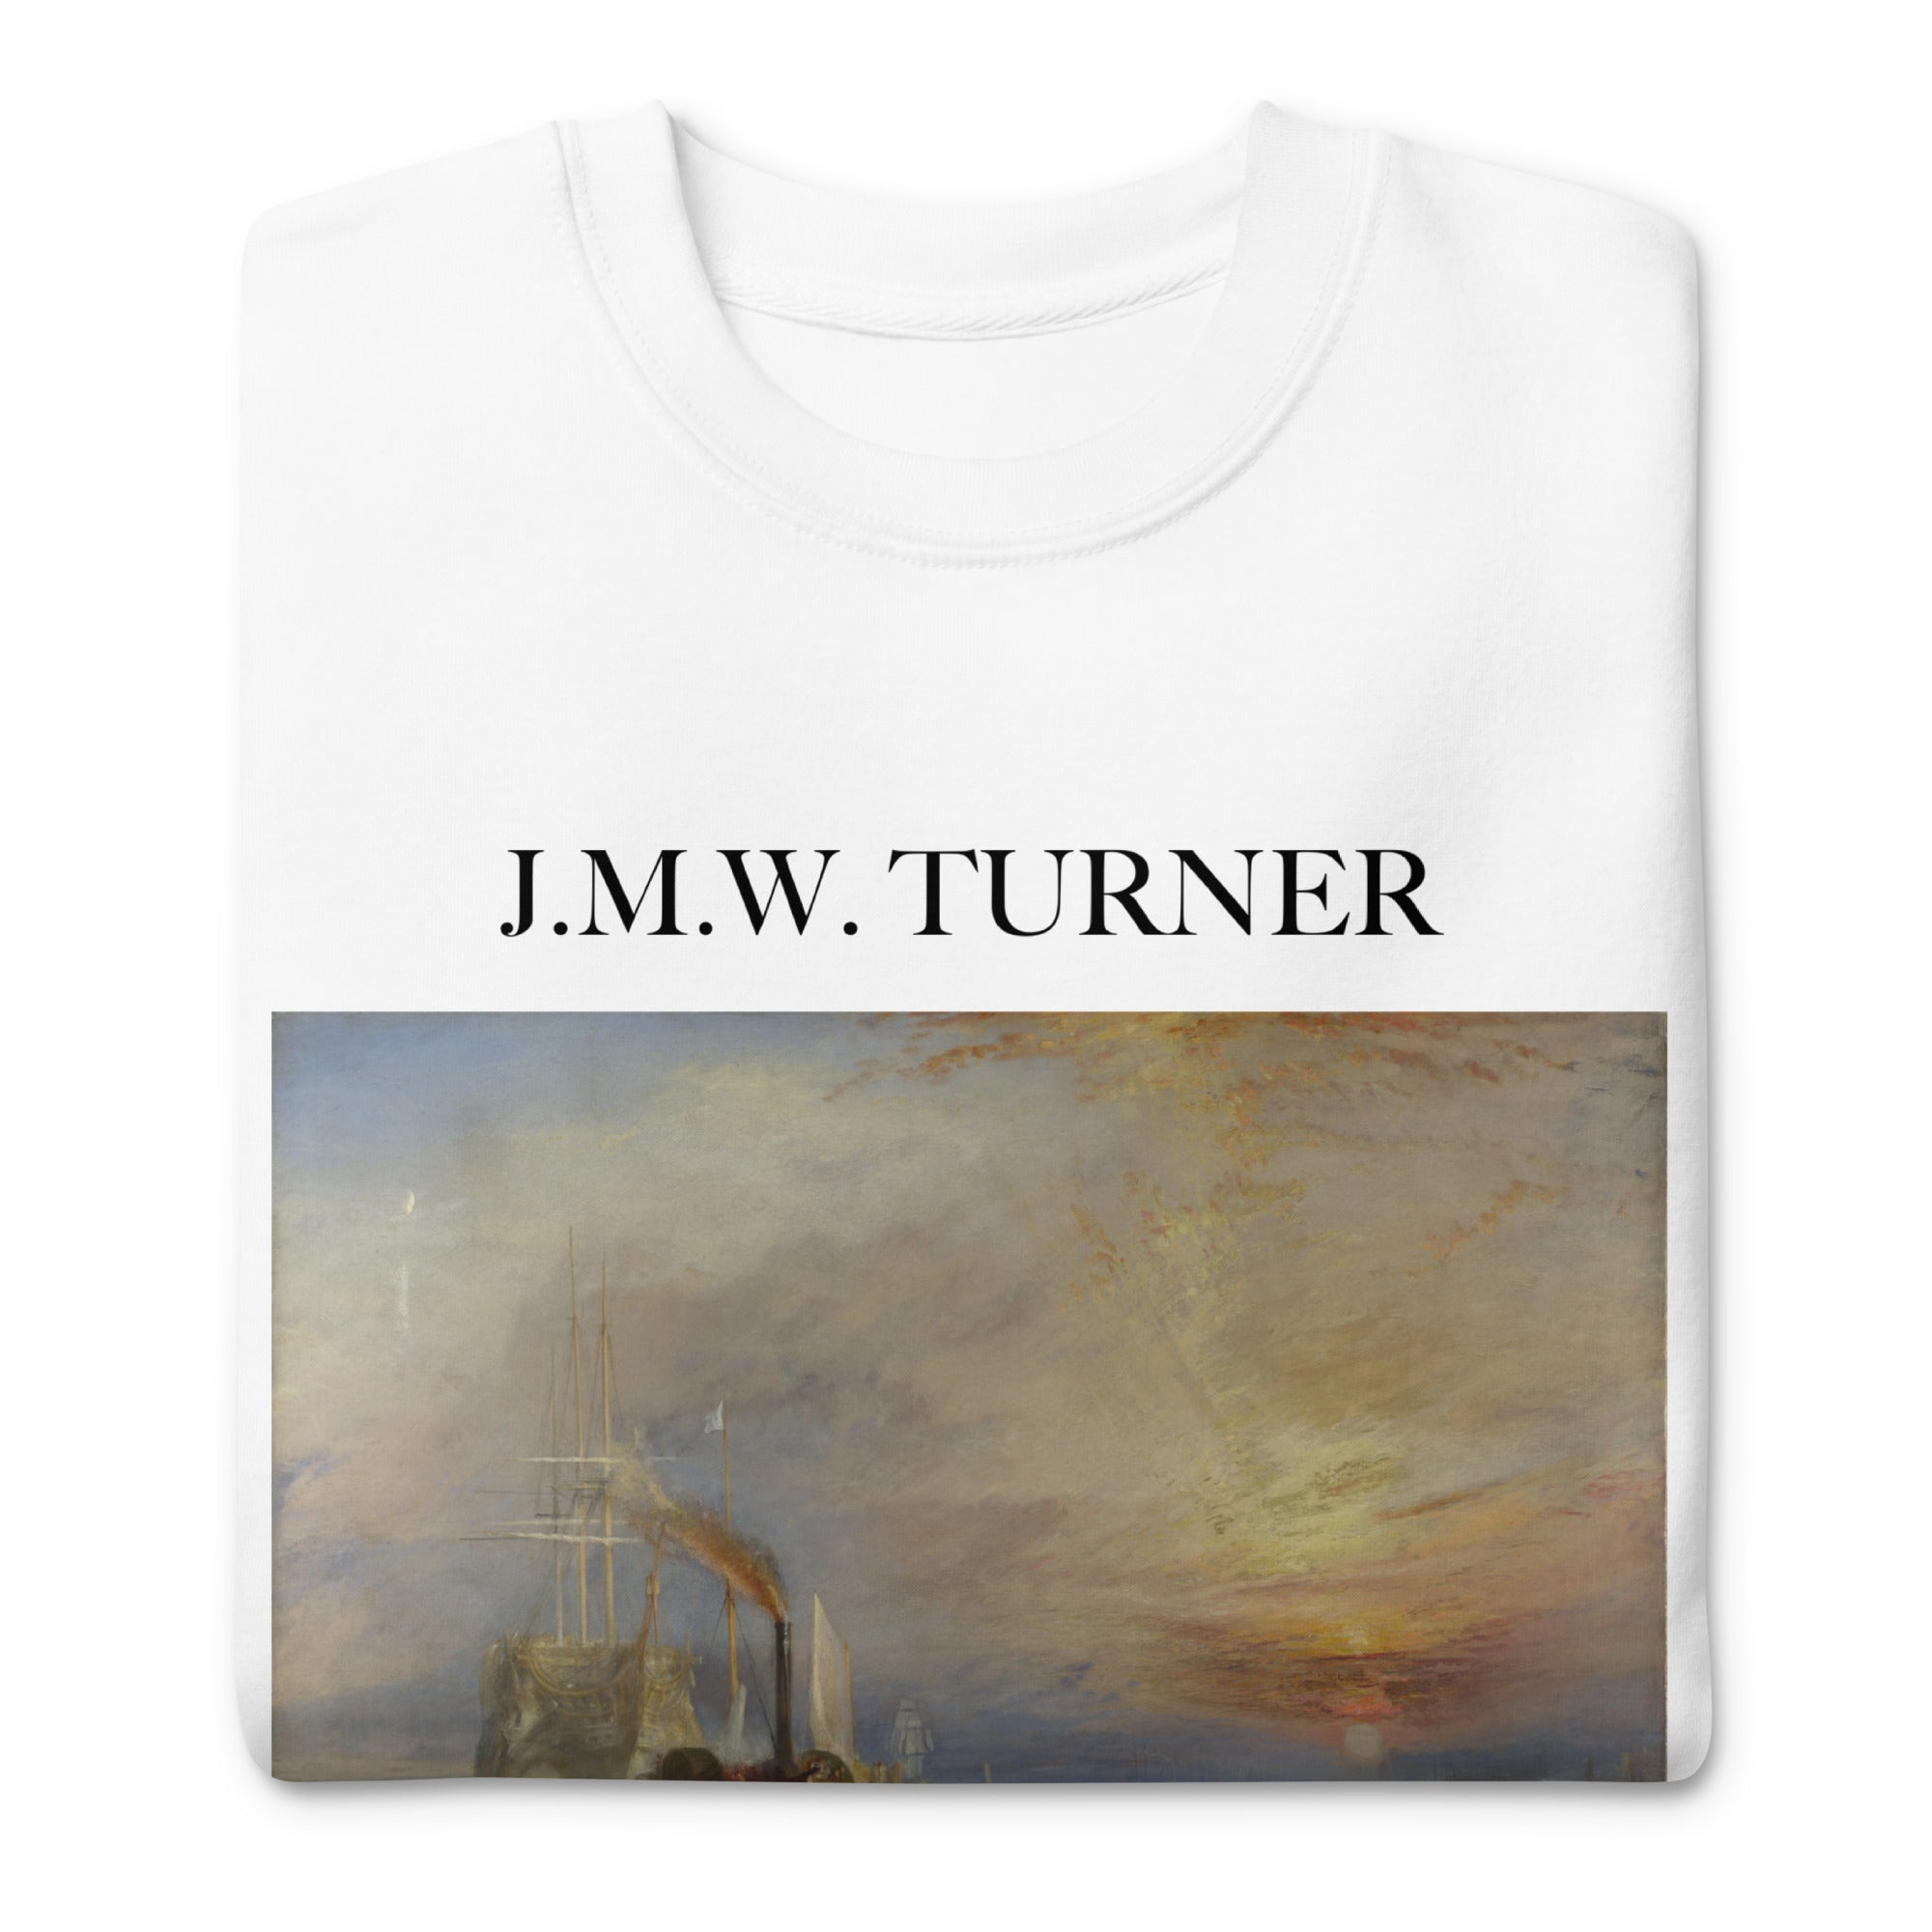 J.M.W. Turner 'The Fighting Temeraire' Famous Painting Sweatshirt | Unisex Premium Sweatshirt